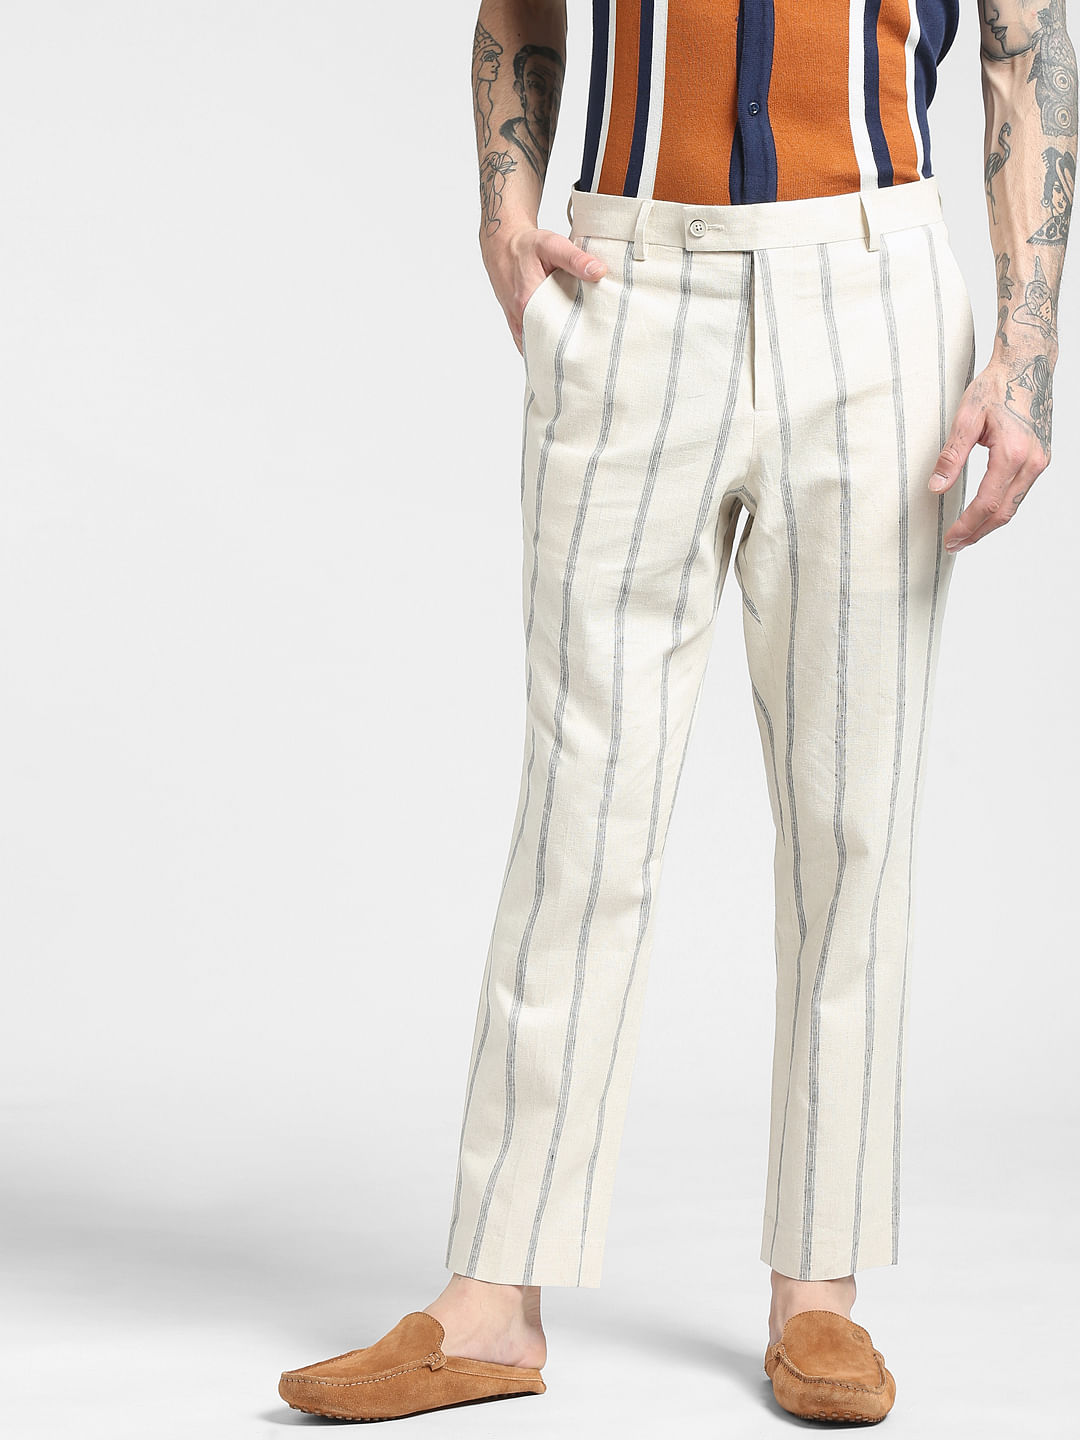 MEN FASHION Trousers Shorts Jack & Jones slacks discount 56% Navy Blue M 